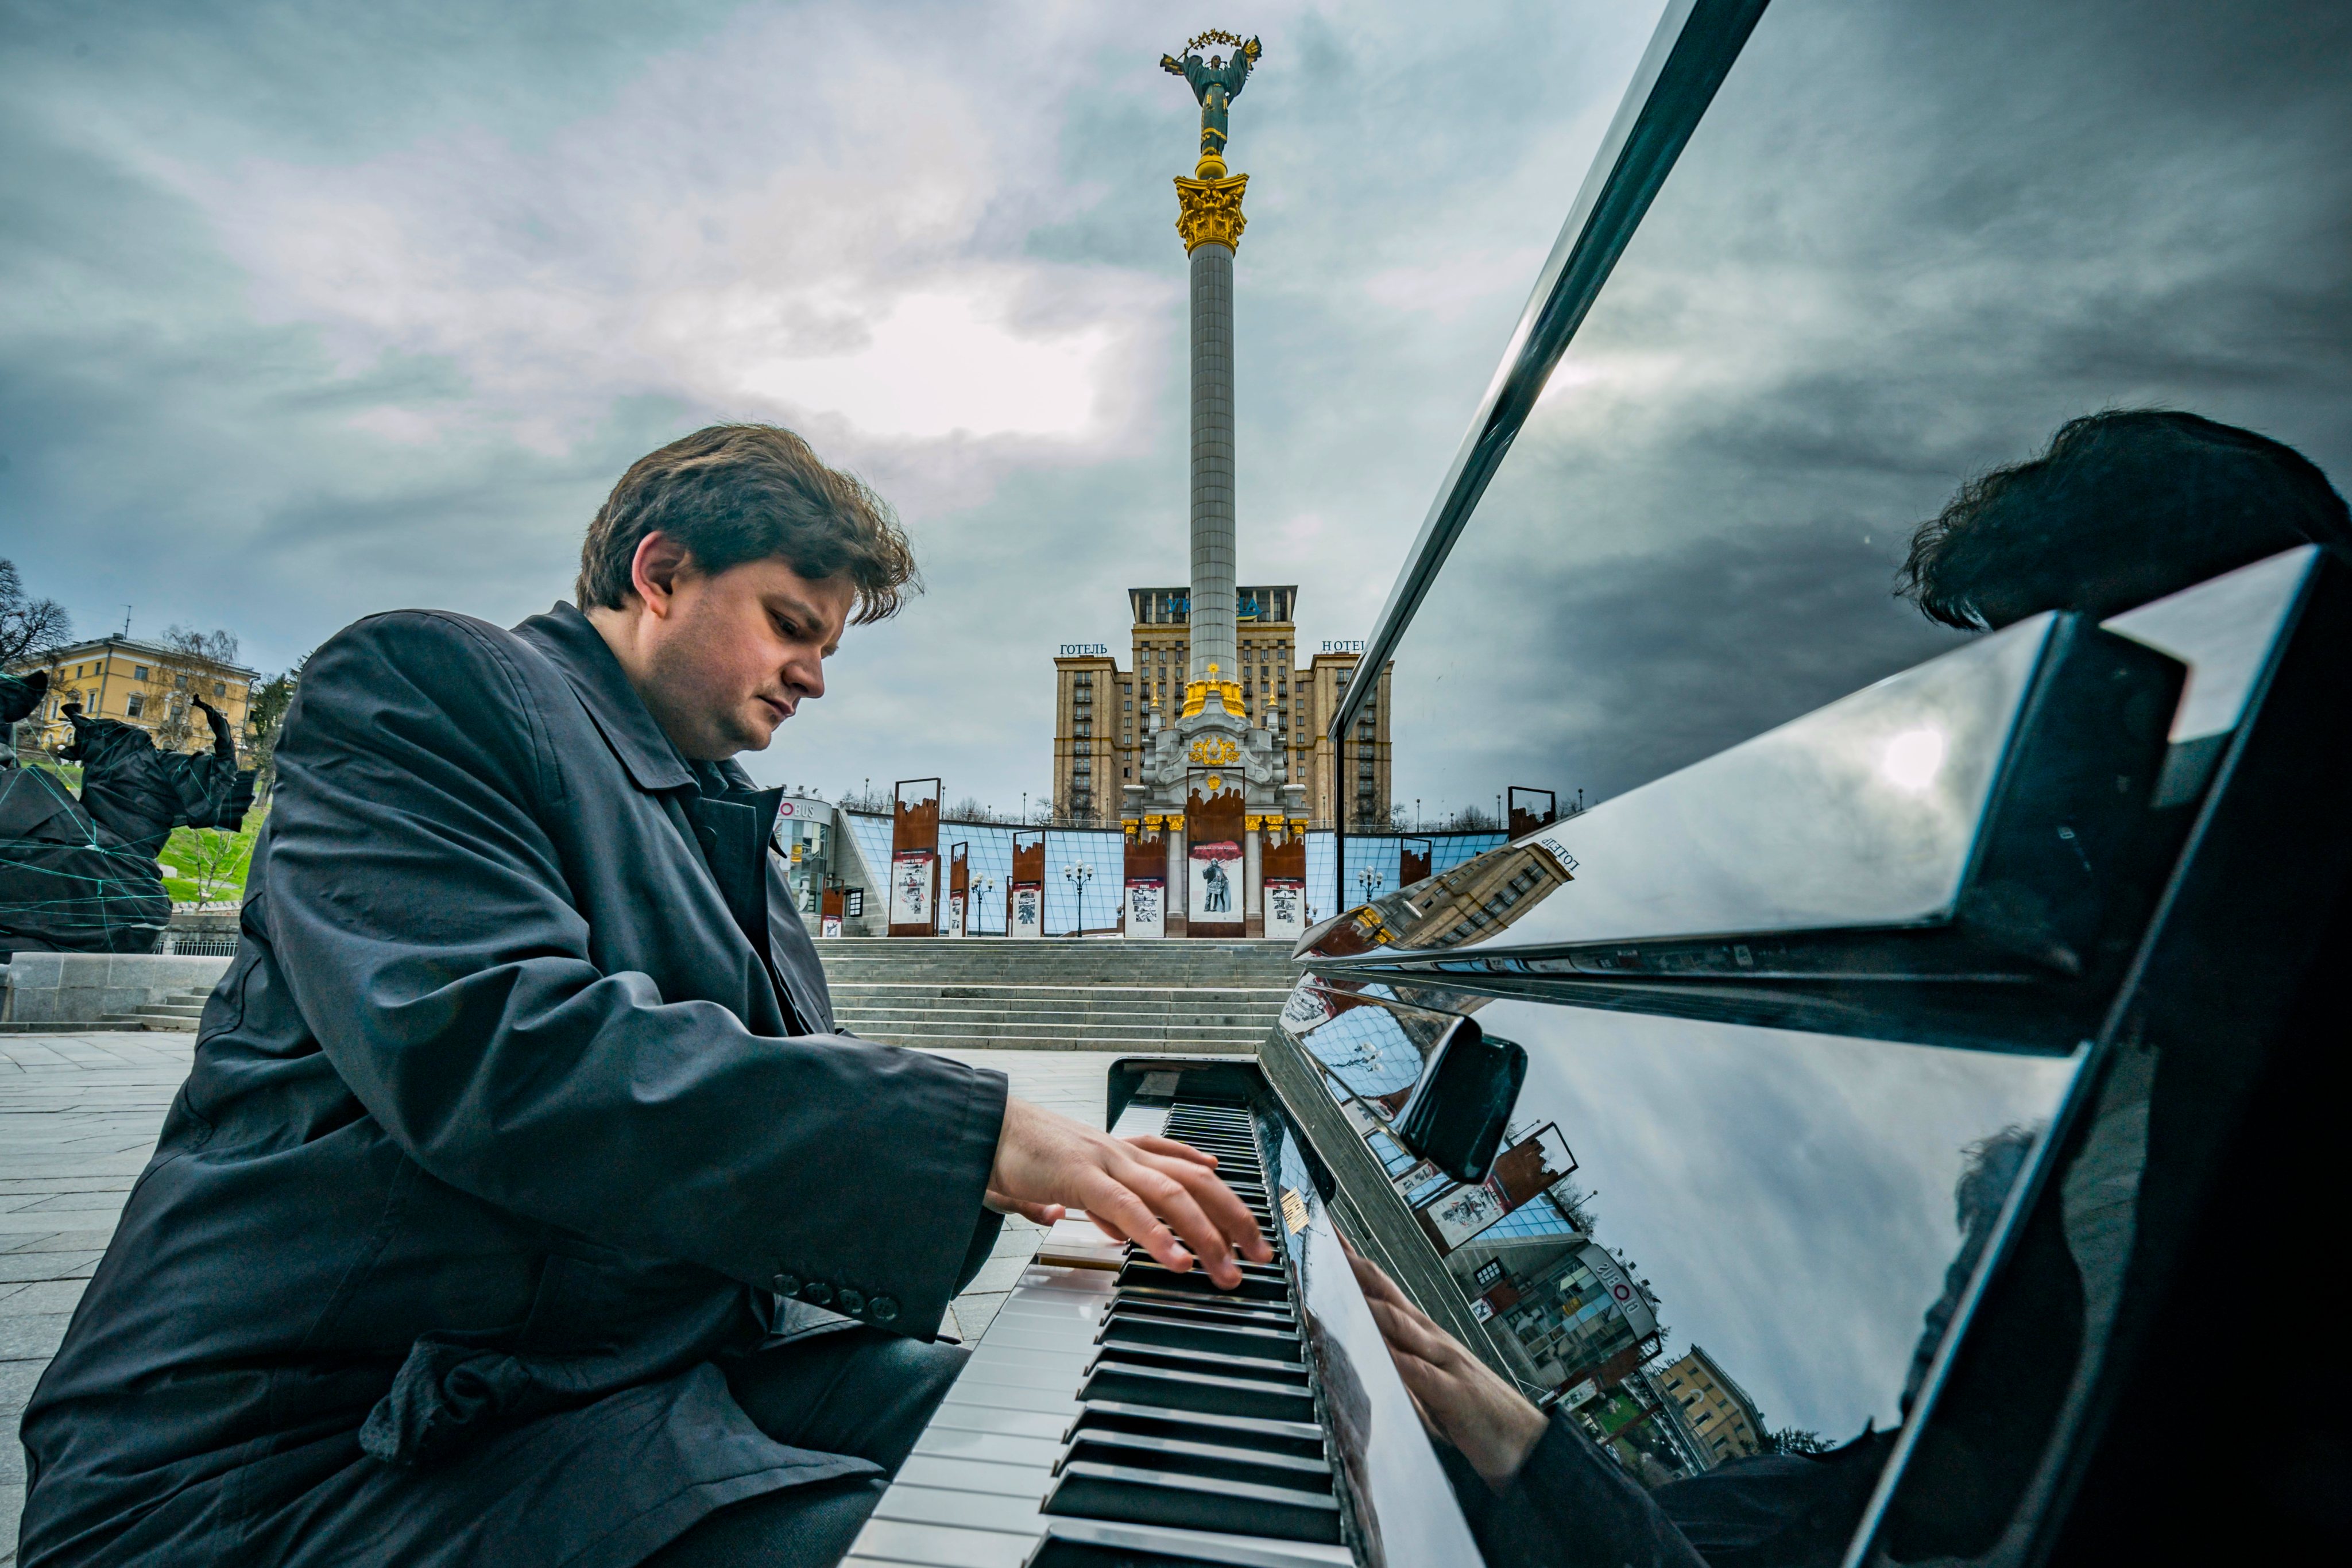 Piano performance by Roman Lopatynsky in the Maidan Square, Kyiv